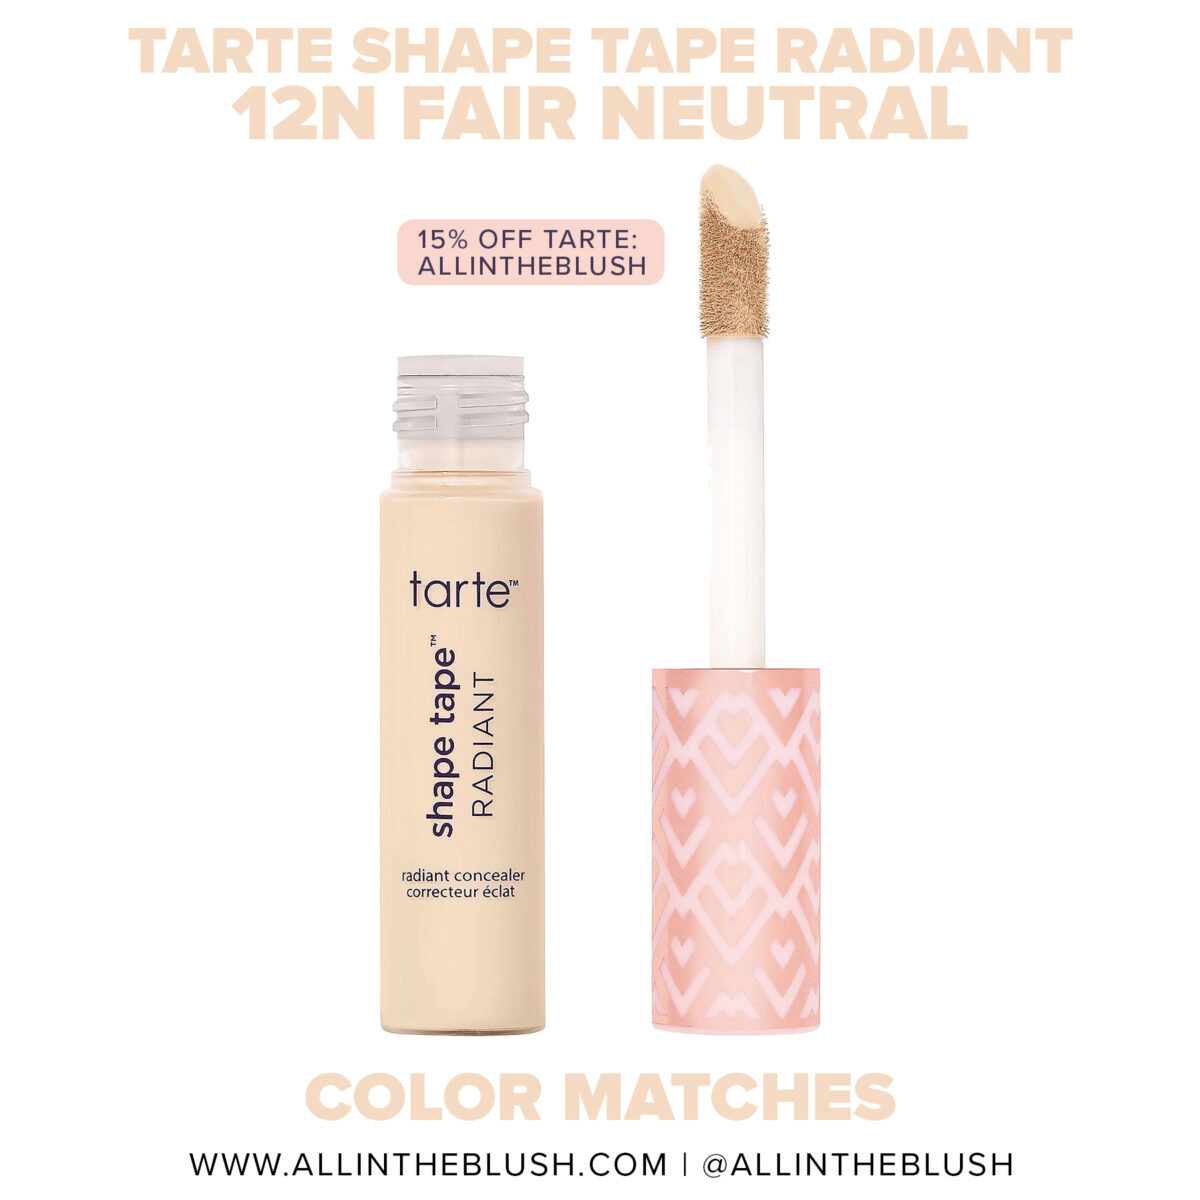 Tarte 12N Fair Neutral Shape Tape Radiant Concealer Color Matches